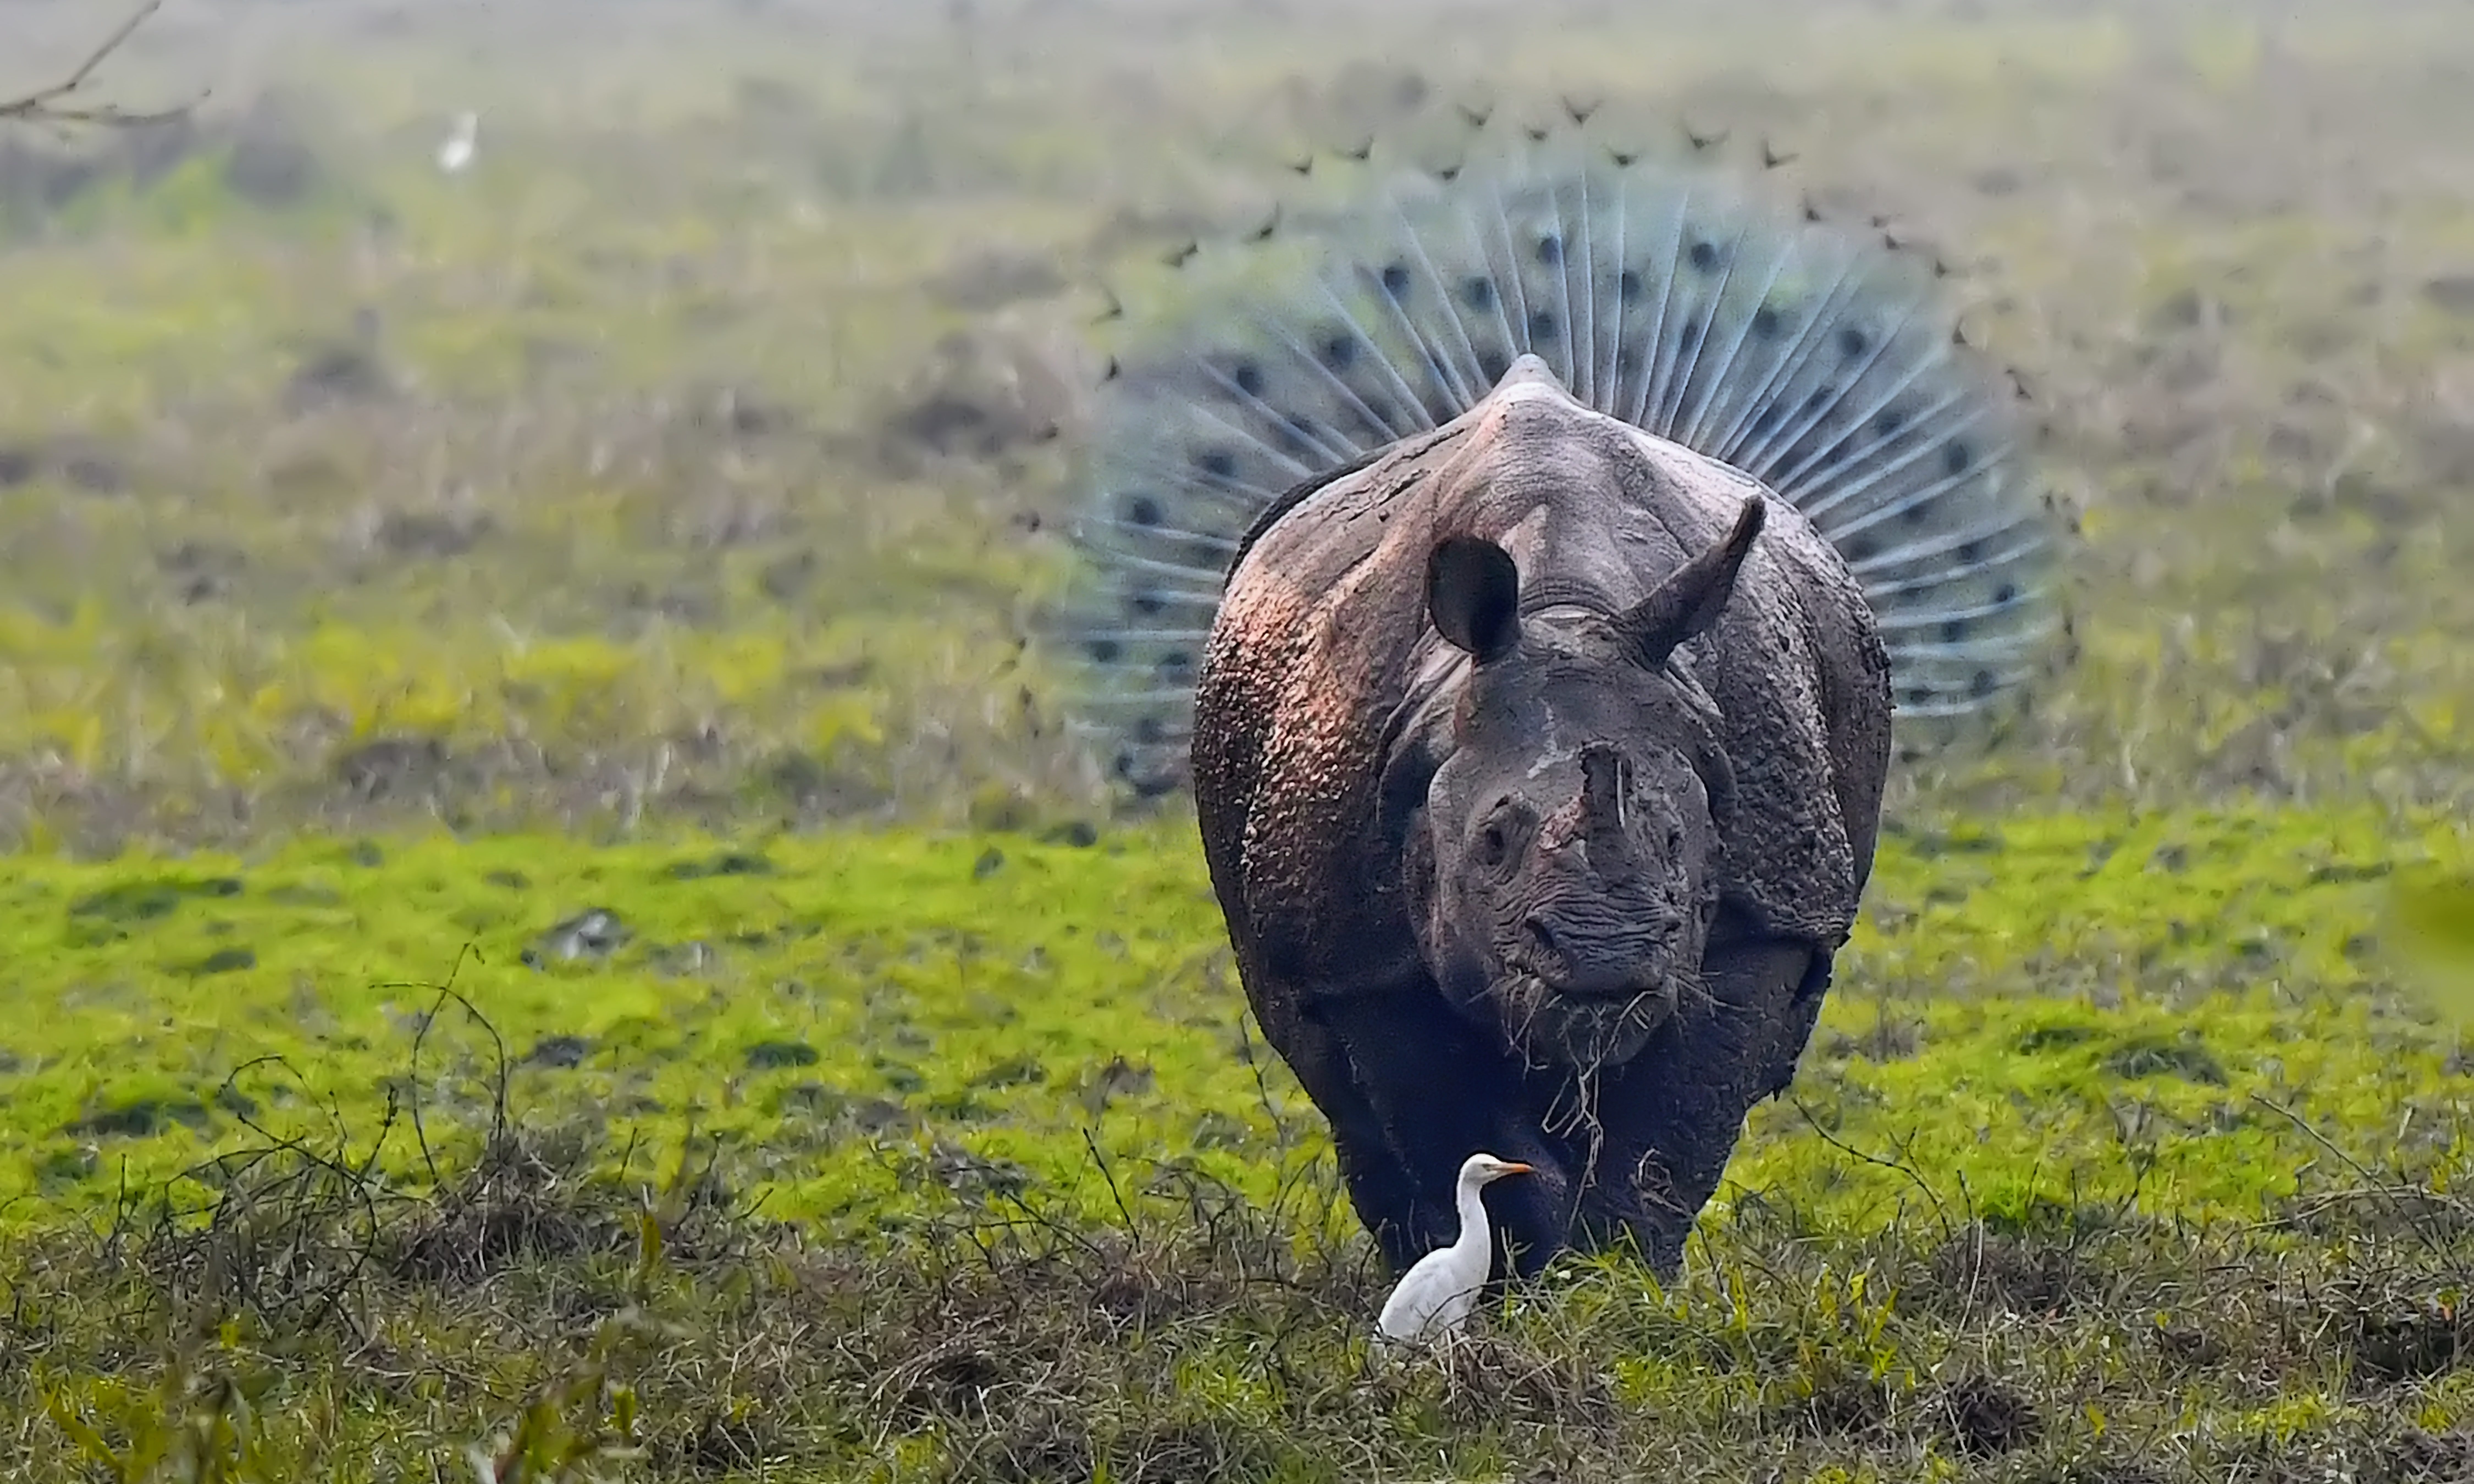 Rhinopeacock